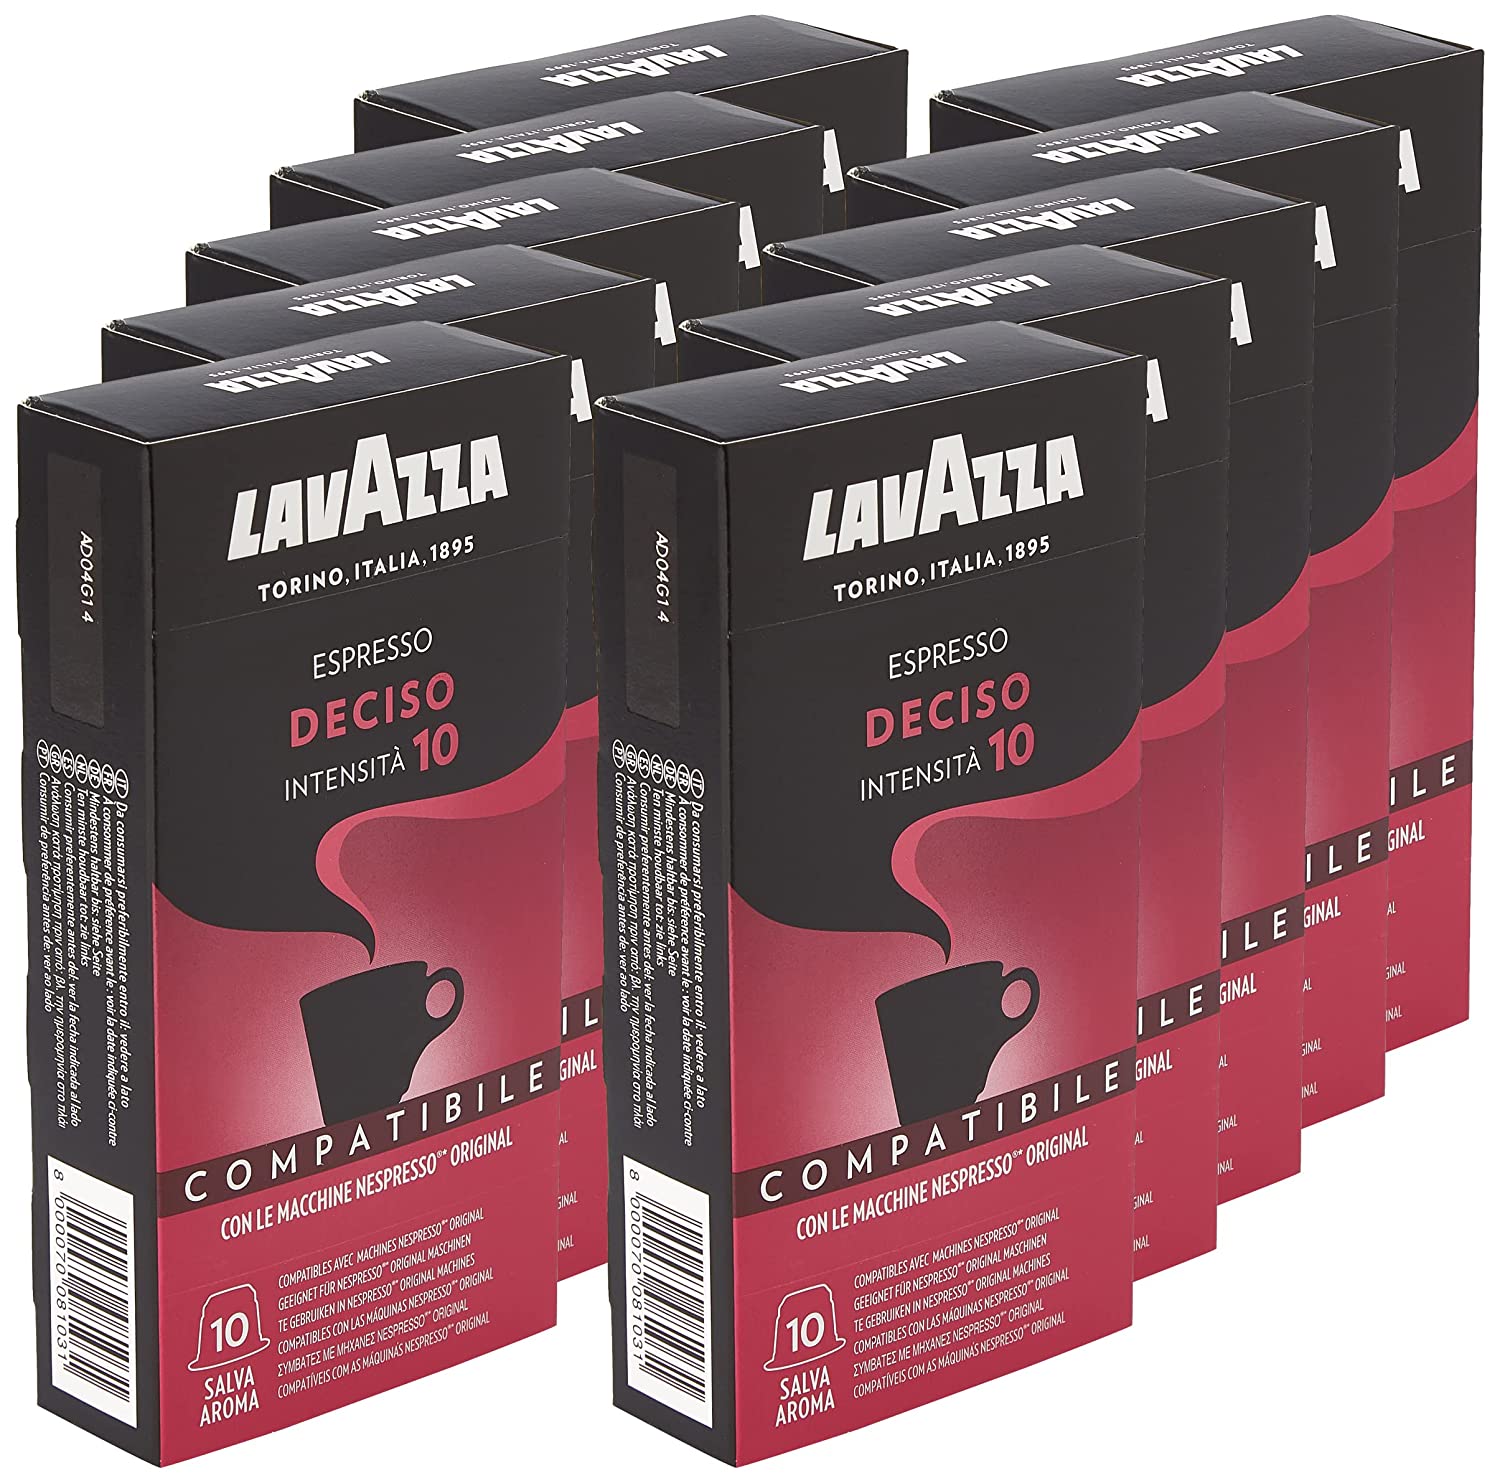 100-Count Lavazza Nespresso Capsules: Deciso (Intensity 10) $22.85, Armonico (Intensity 8) $24.30 & More + Free Shipping